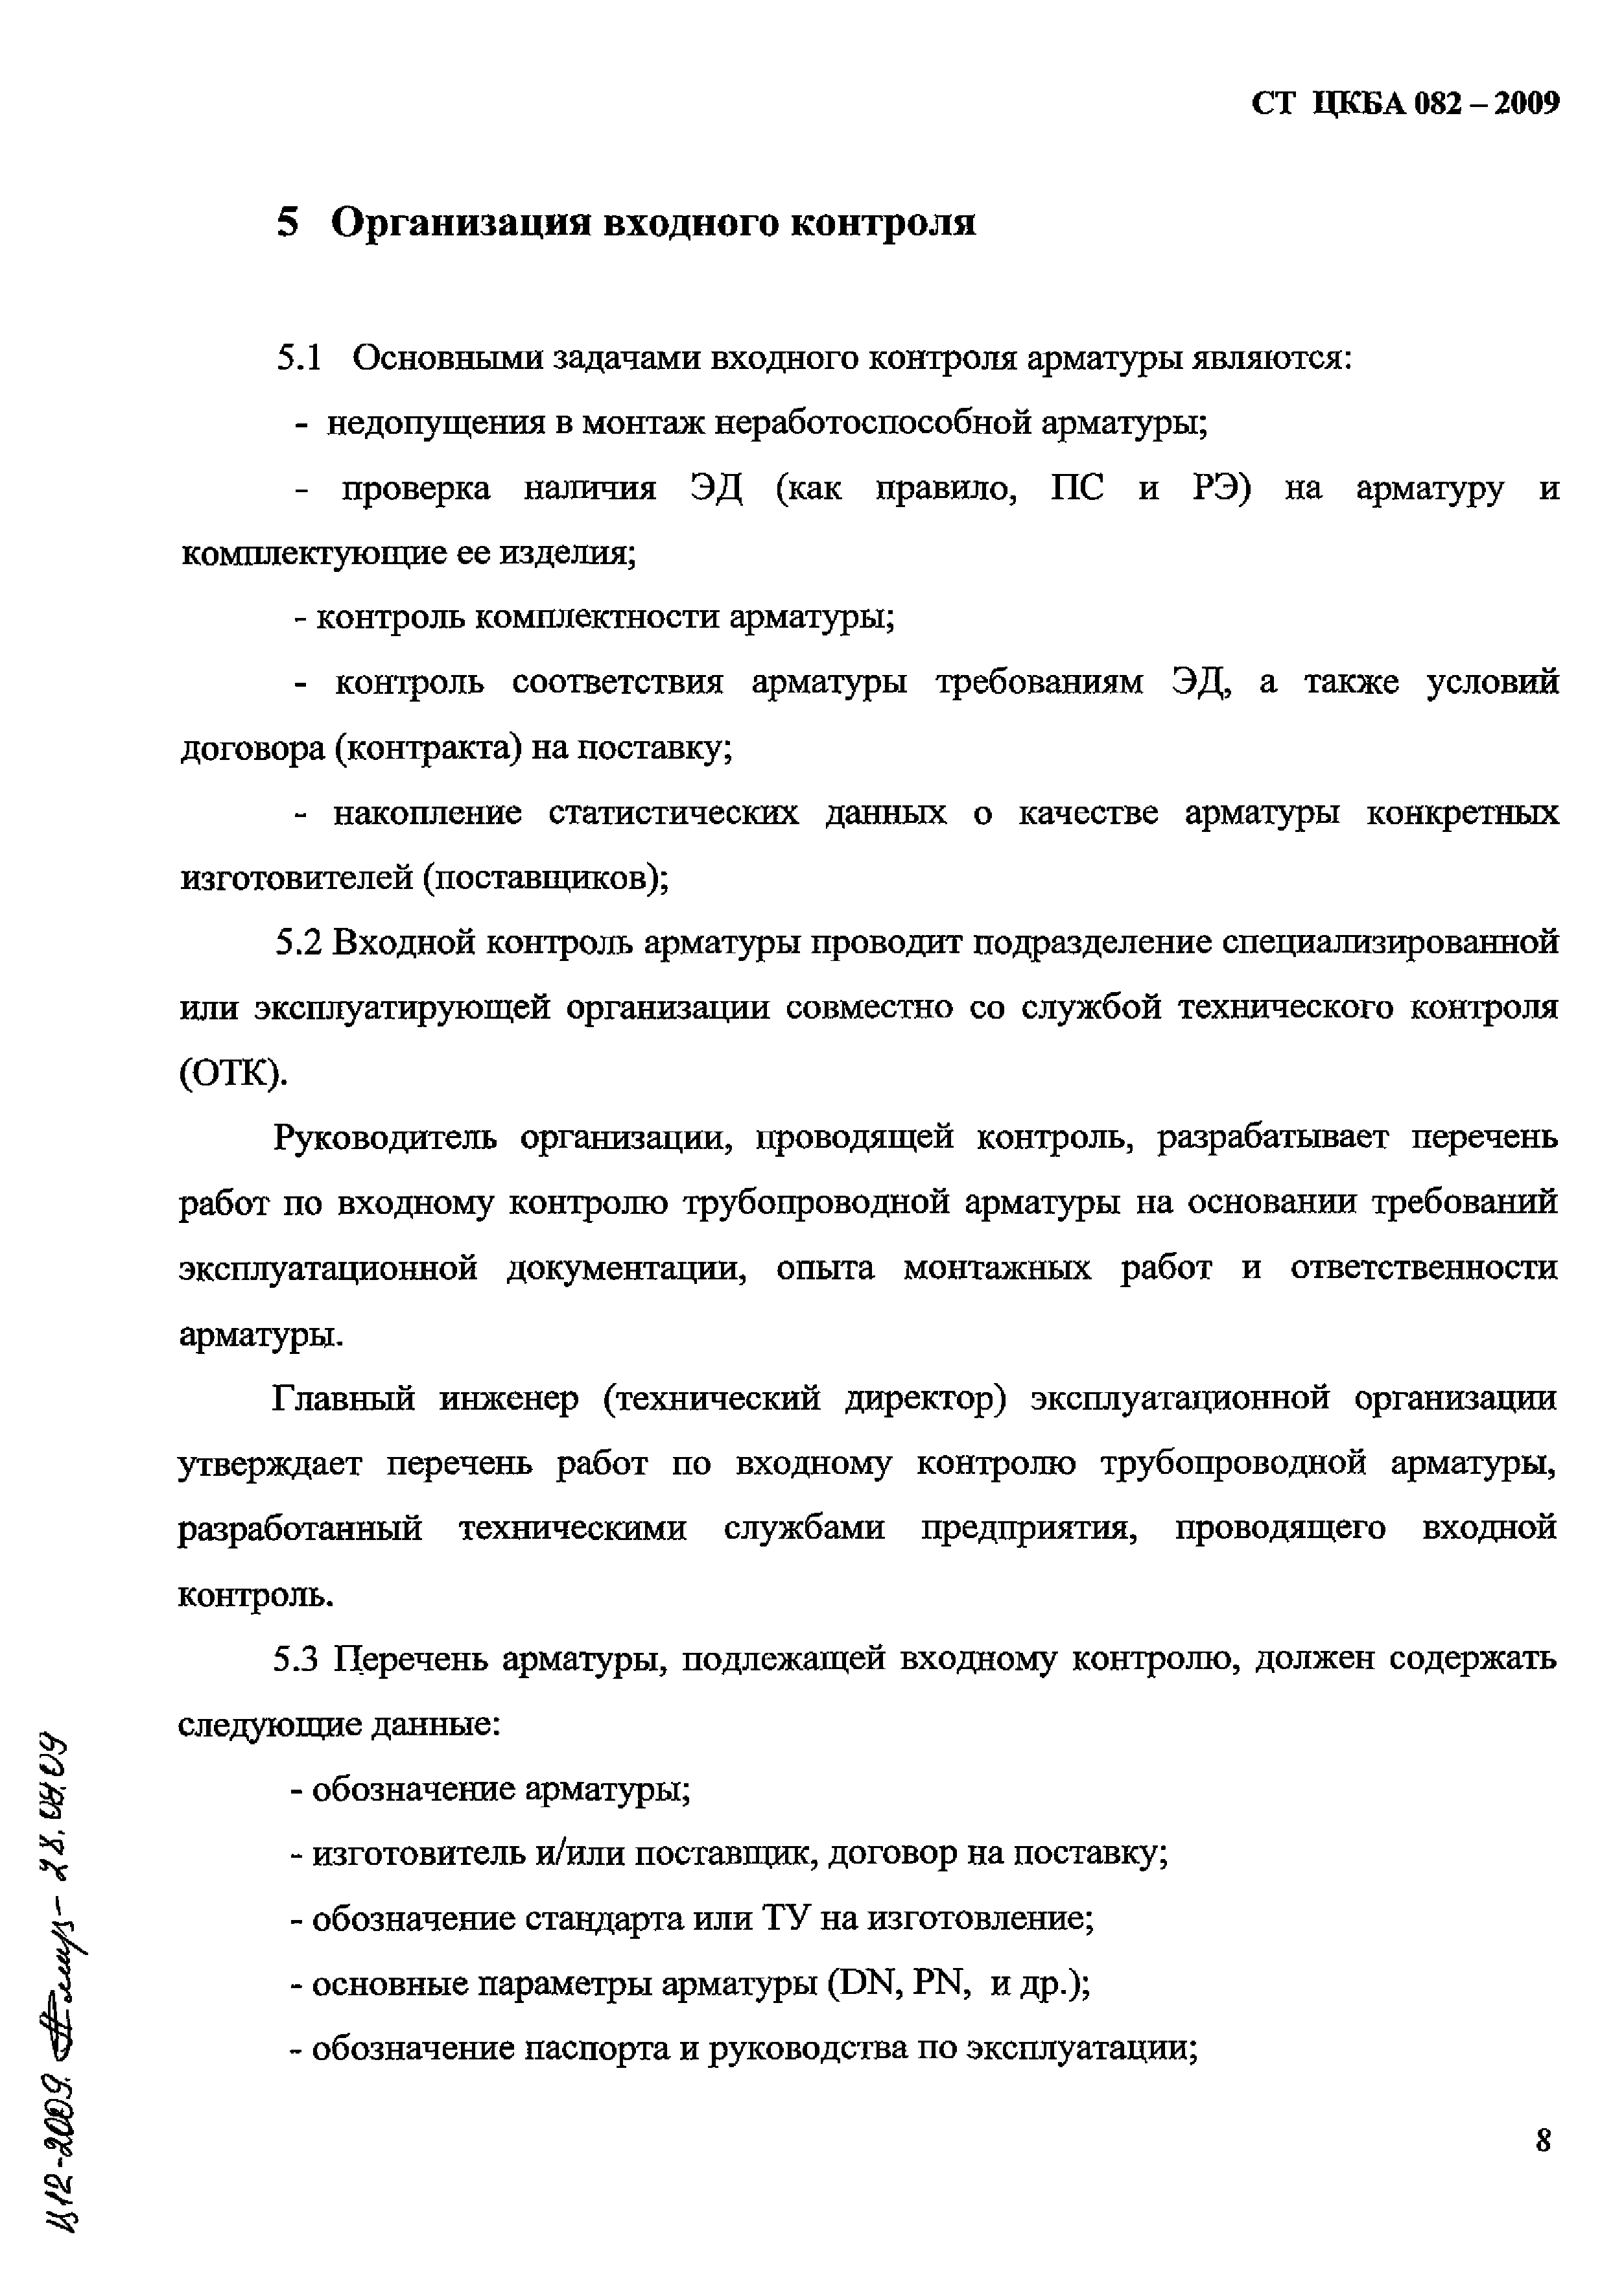 СТ ЦКБА 082-2009